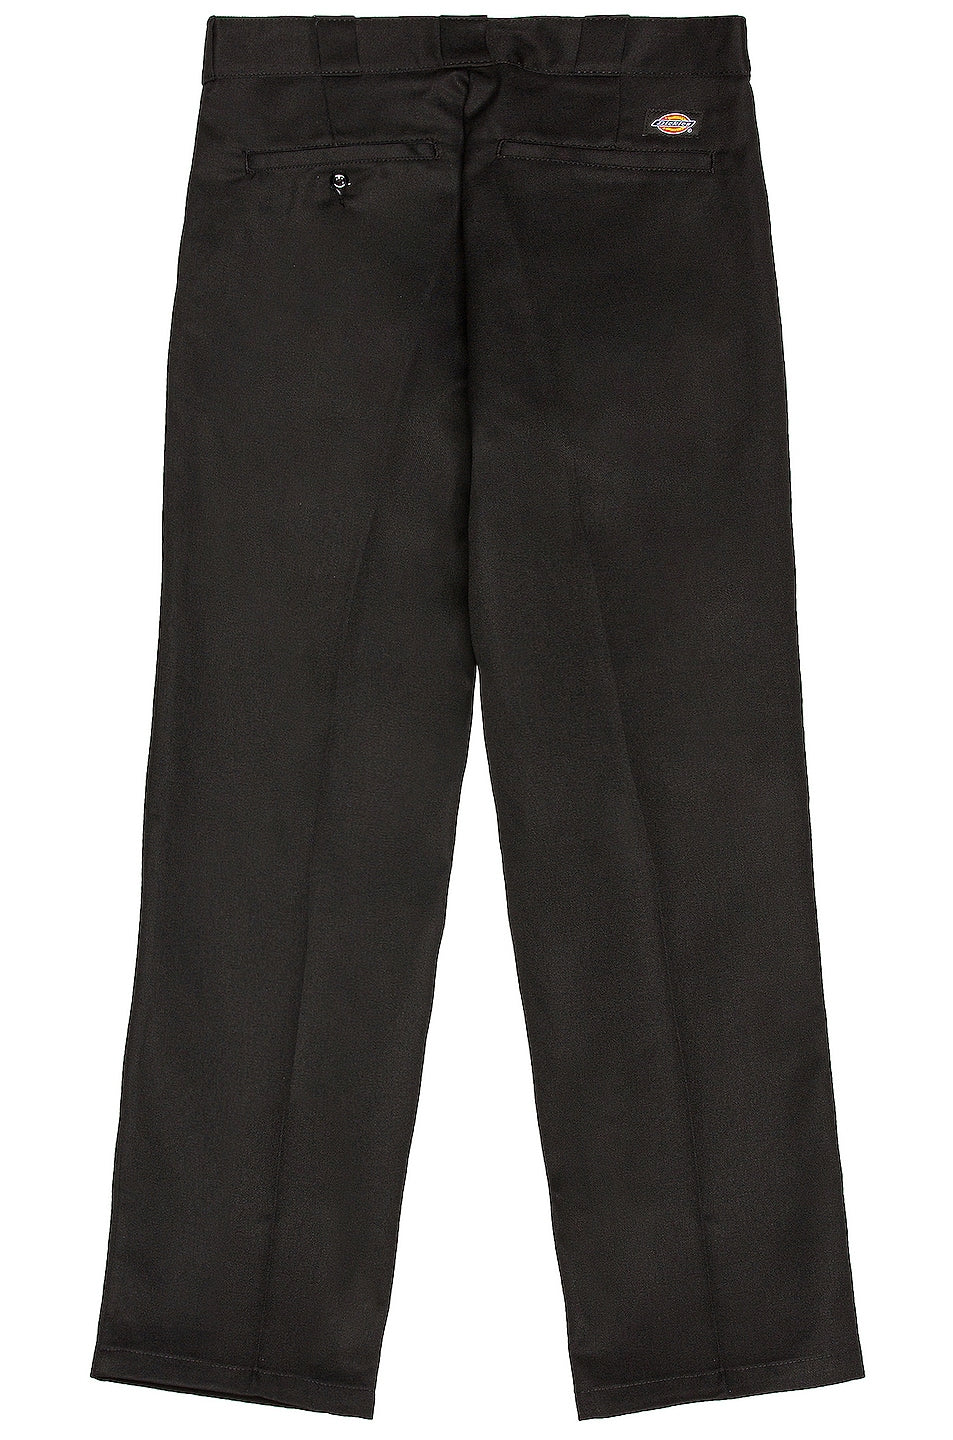 Dickies 874 Work Pants Relaxed Fit (Black) – Shredz Shop Skate